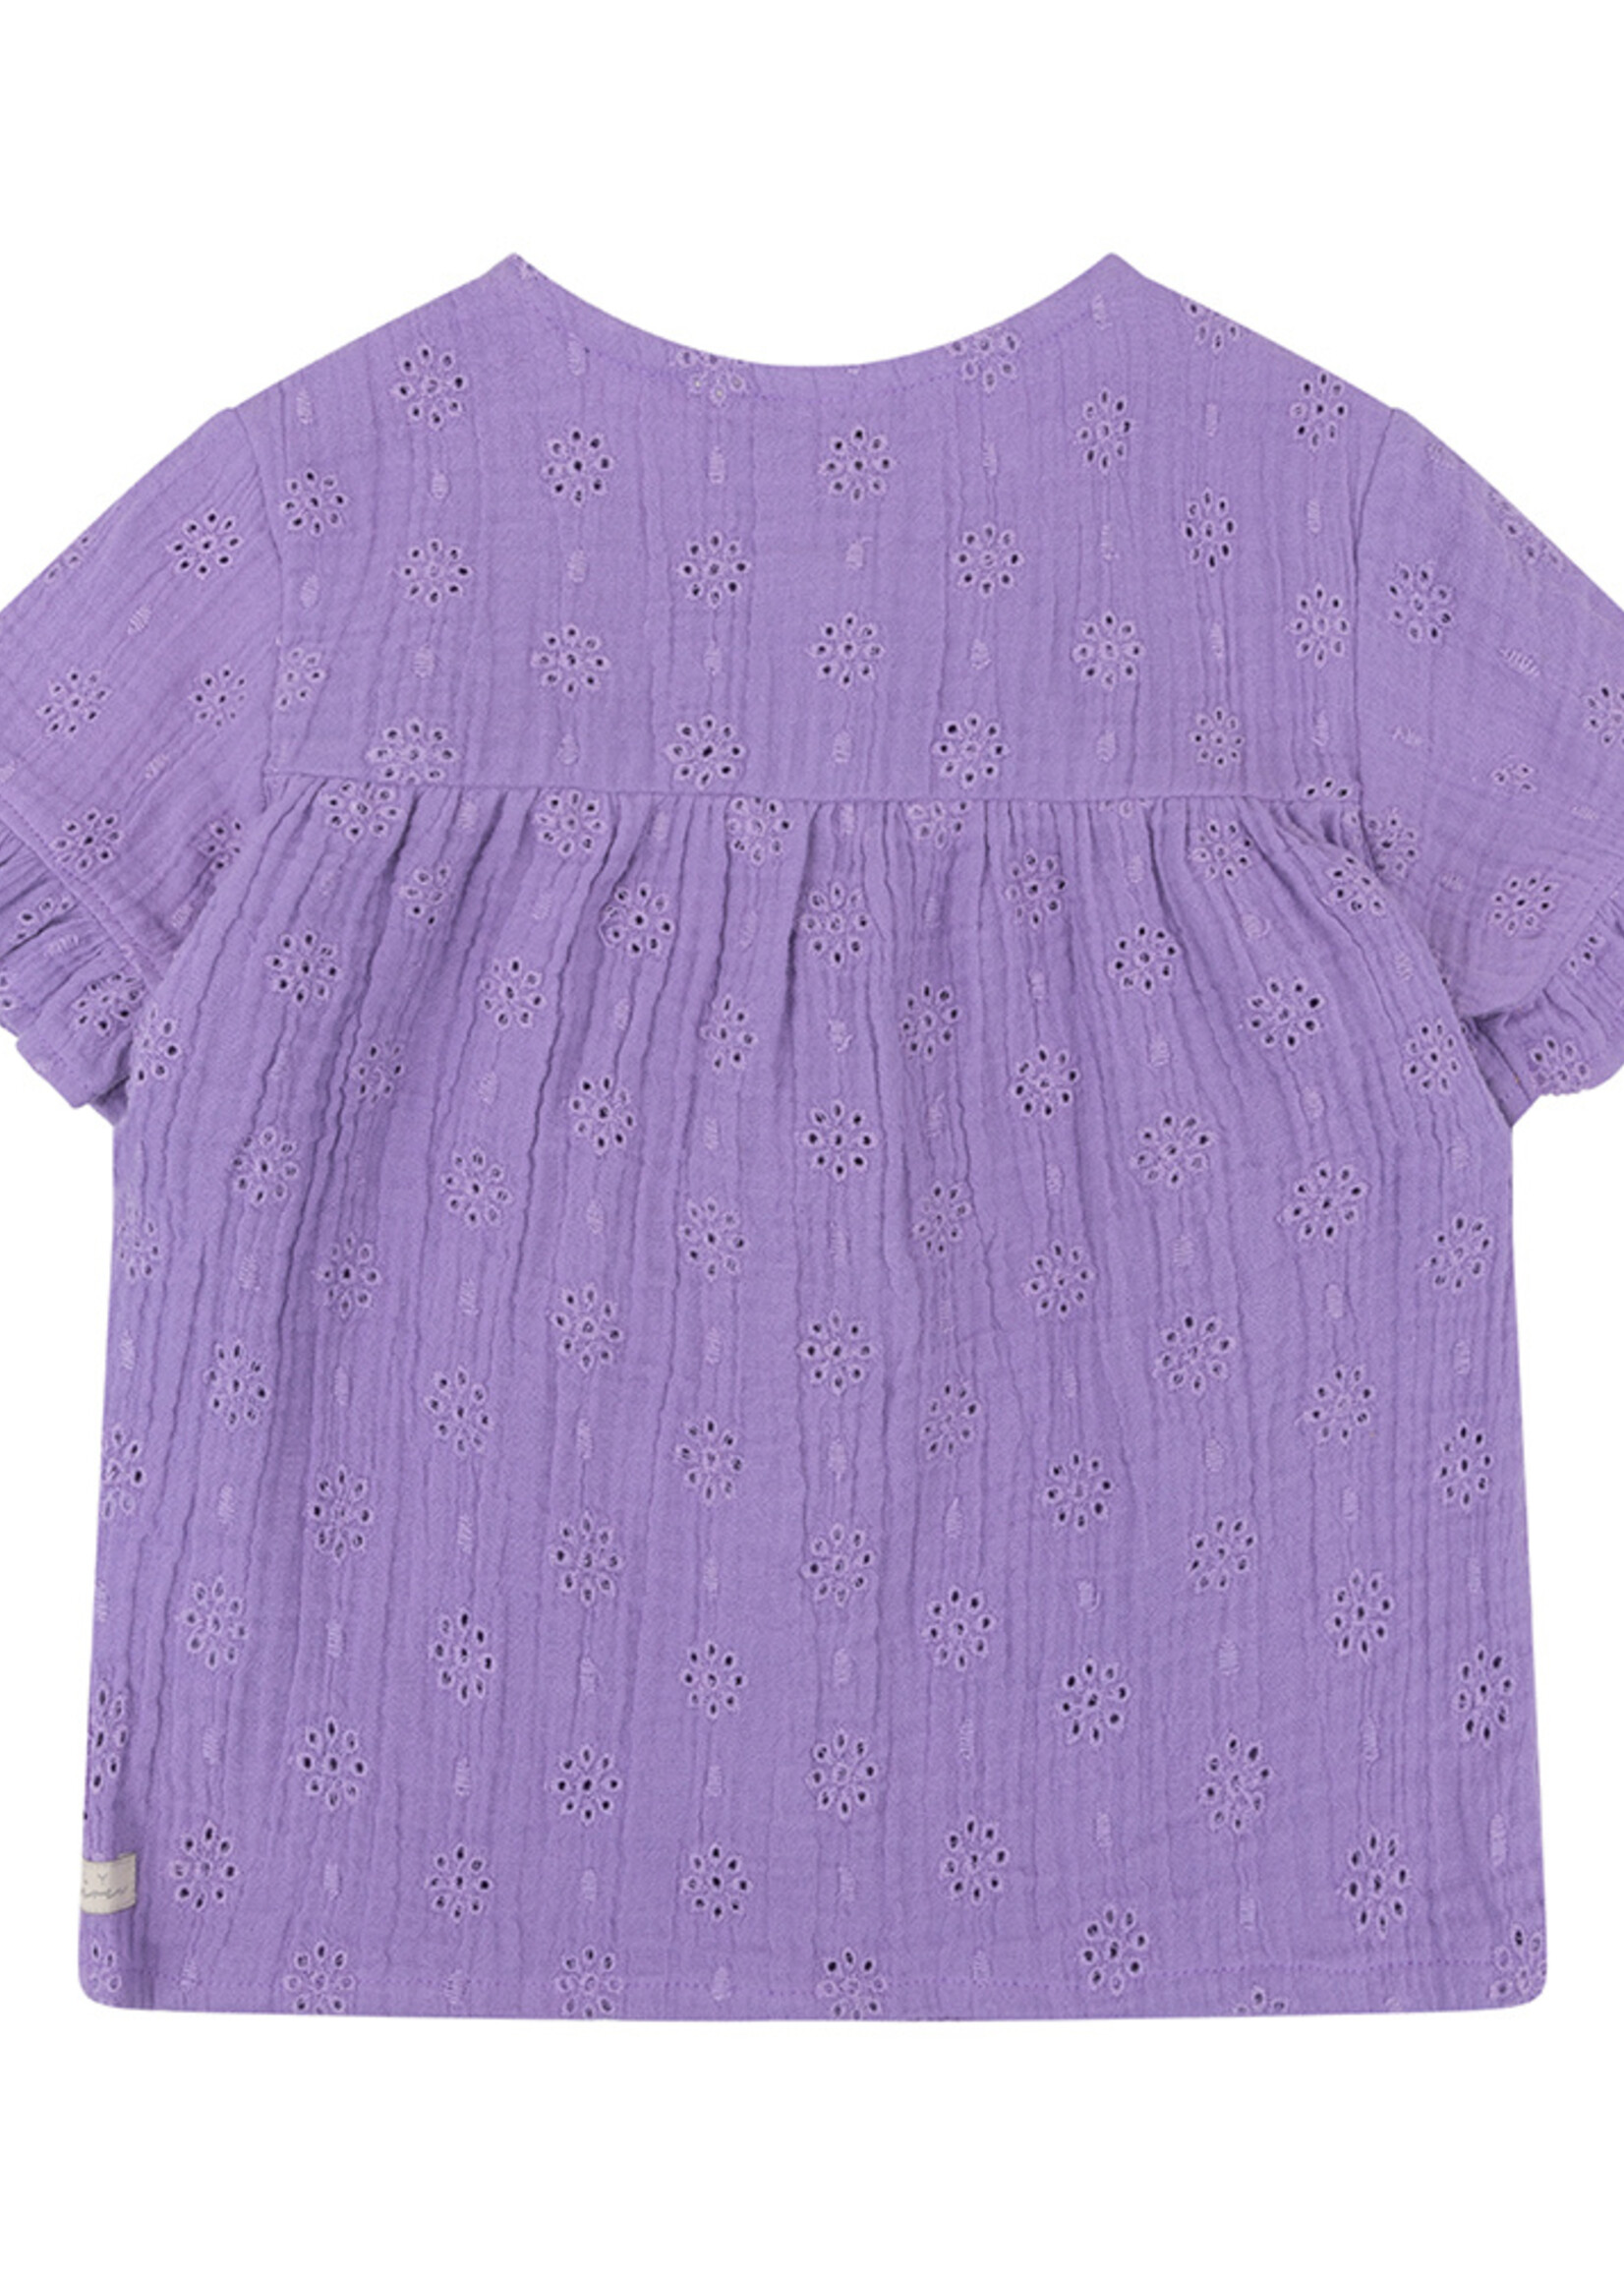 Daily7 Shirt Shortsleeve Muslin Broderie, Dahlia Purple